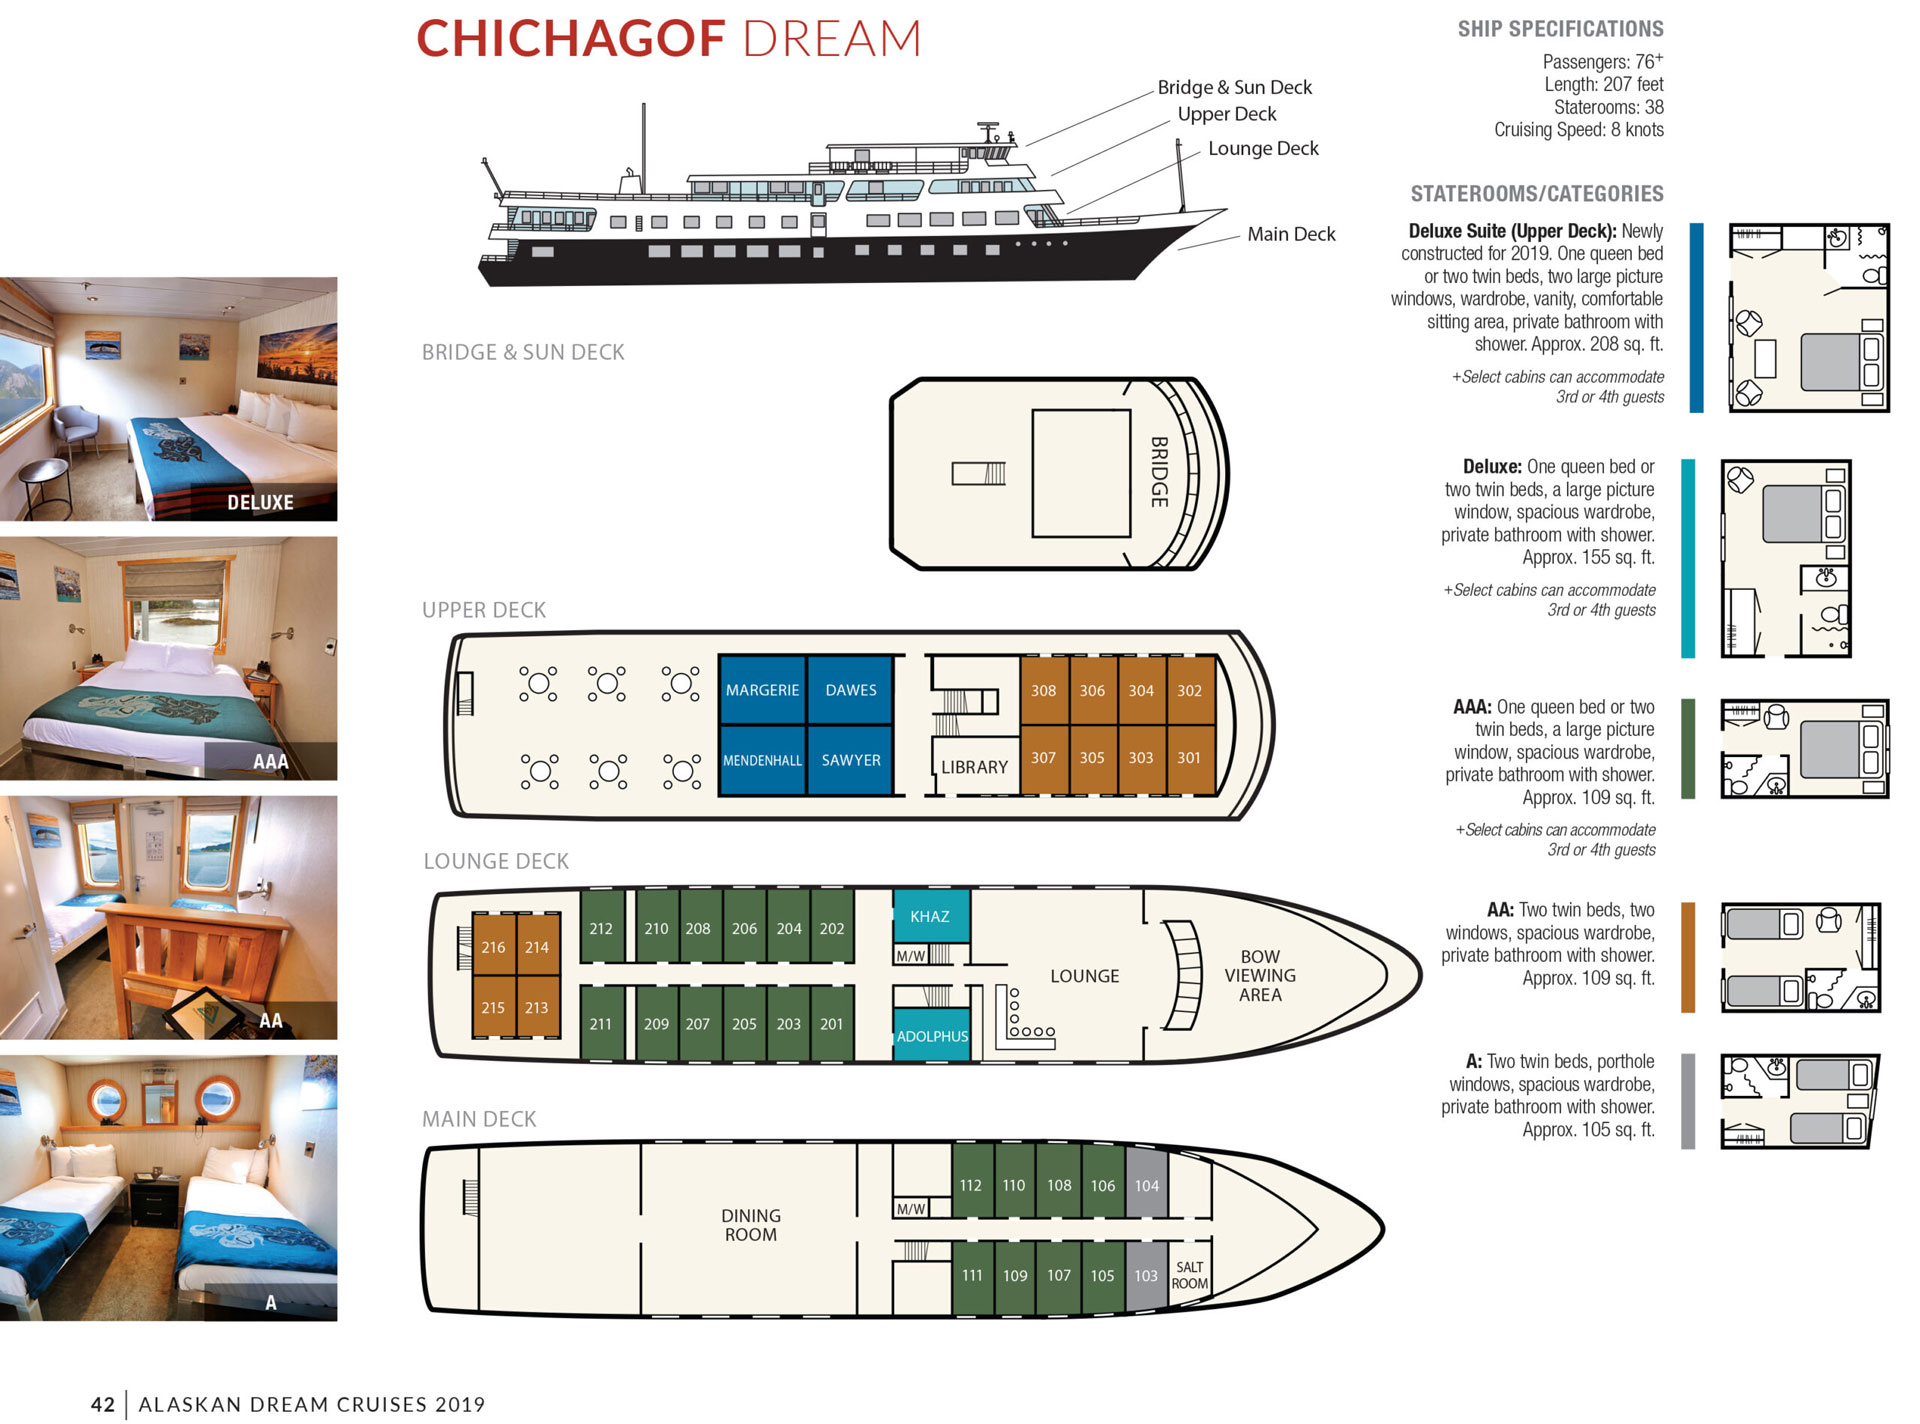 Chichagof Dream ship deck plan showing main, lounge, upper, bridge, & sun decks plus 5 color-coded cabin categories.